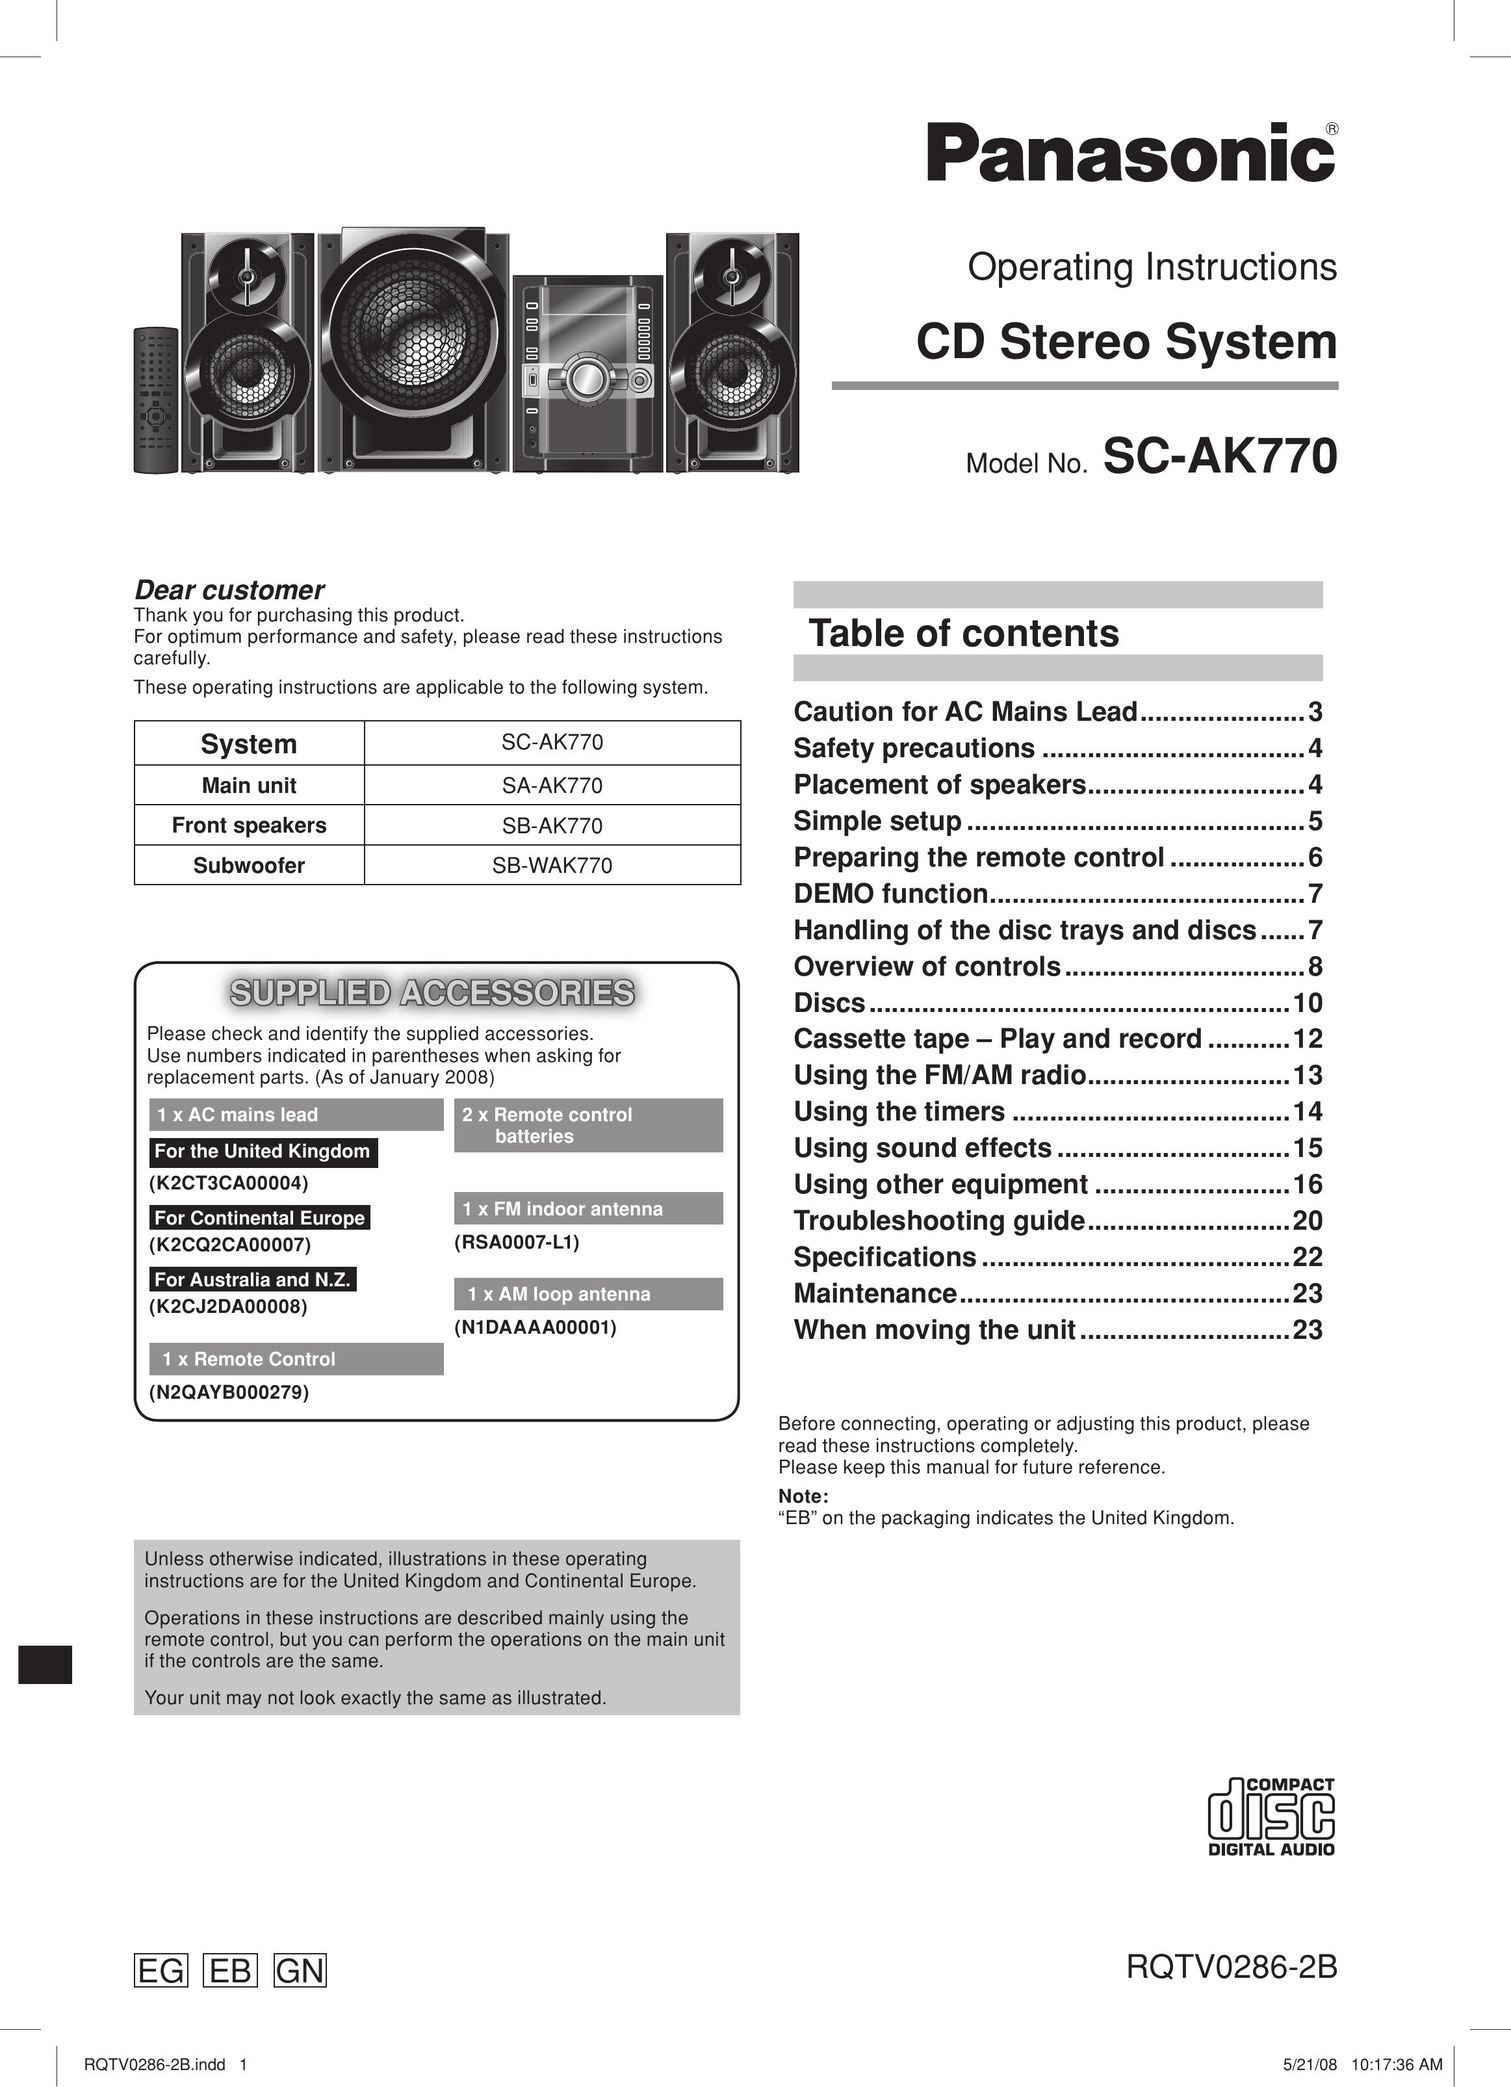 Panasonic SB-AK770 Stereo System User Manual